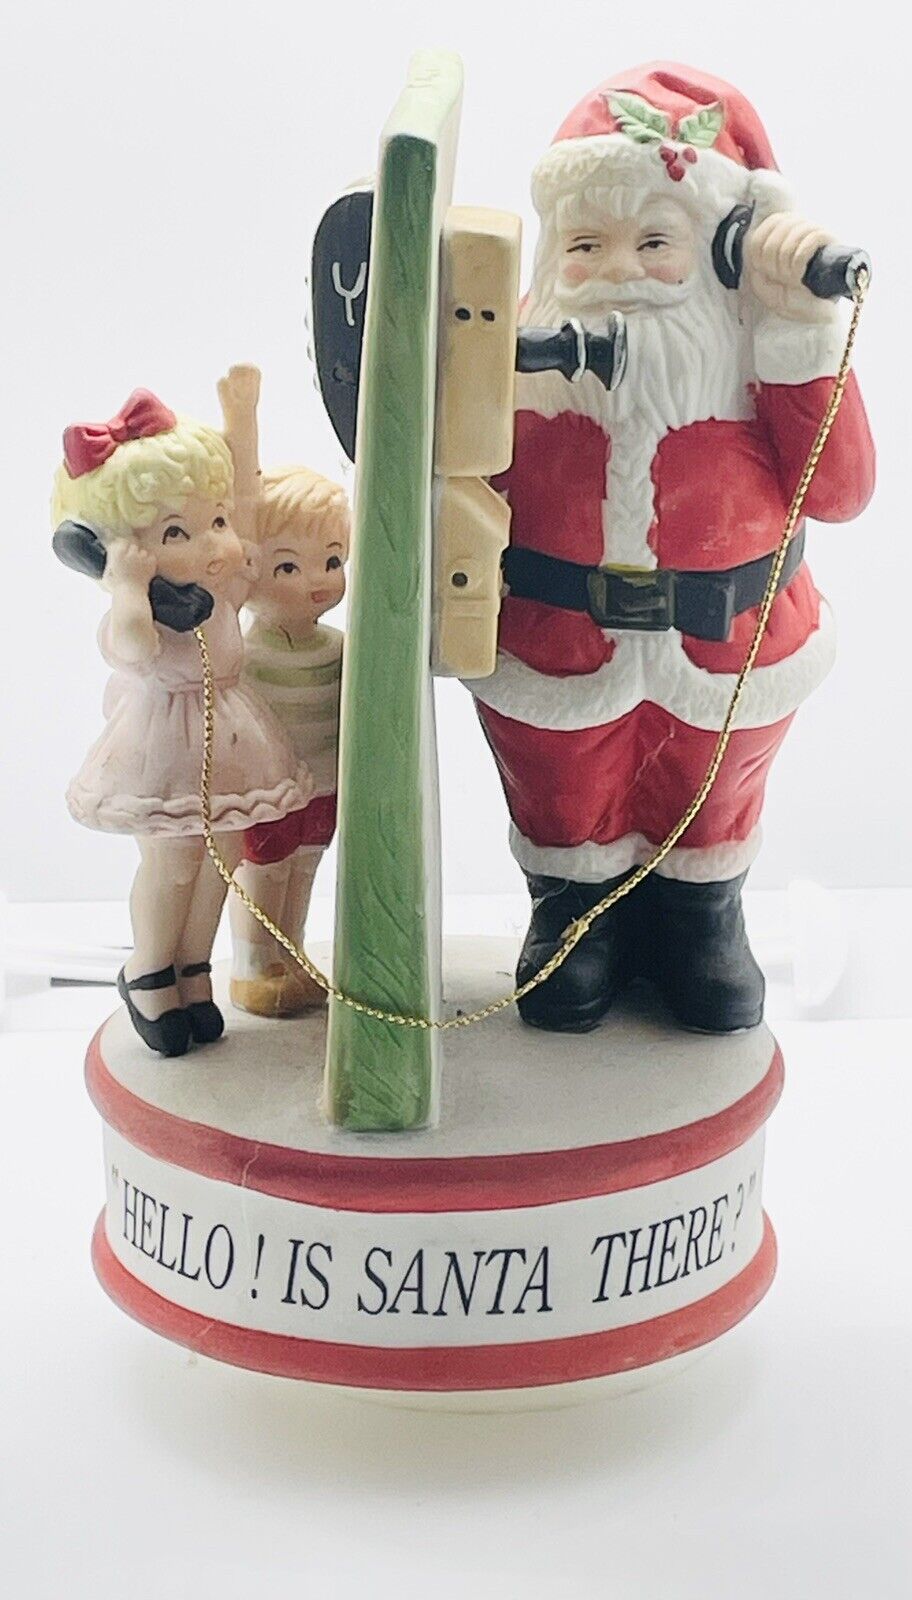 Vintage Ceramic Christmas Music Box Santa Clause “Hello Is Santa There?”